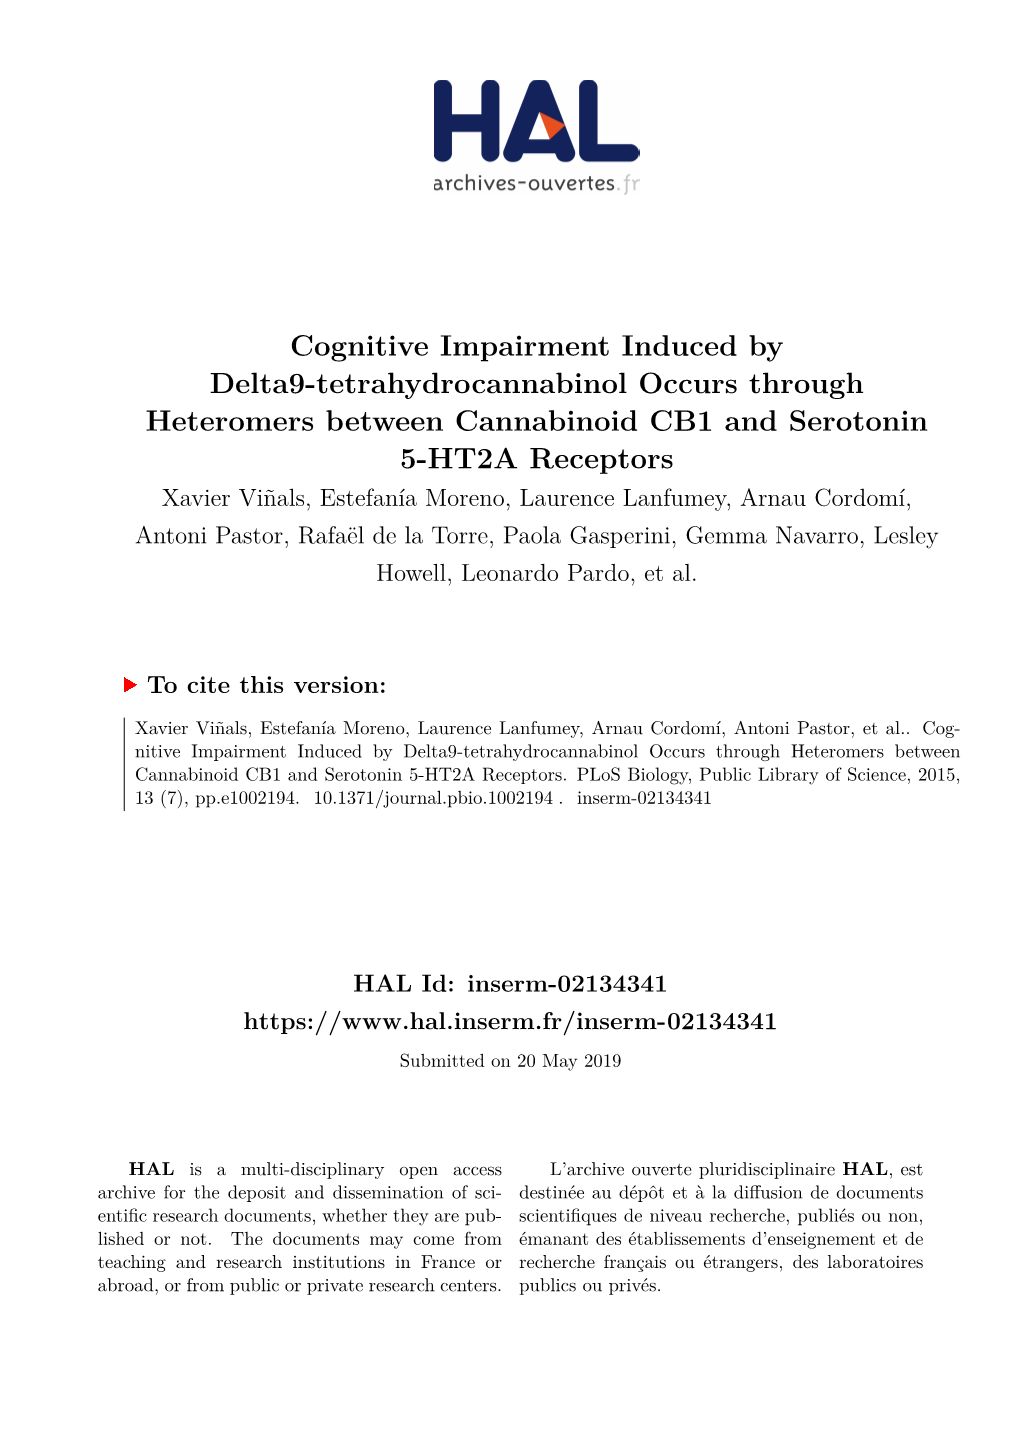 Cognitive Impairment Induced by Delta9-Tetrahydrocannabinol